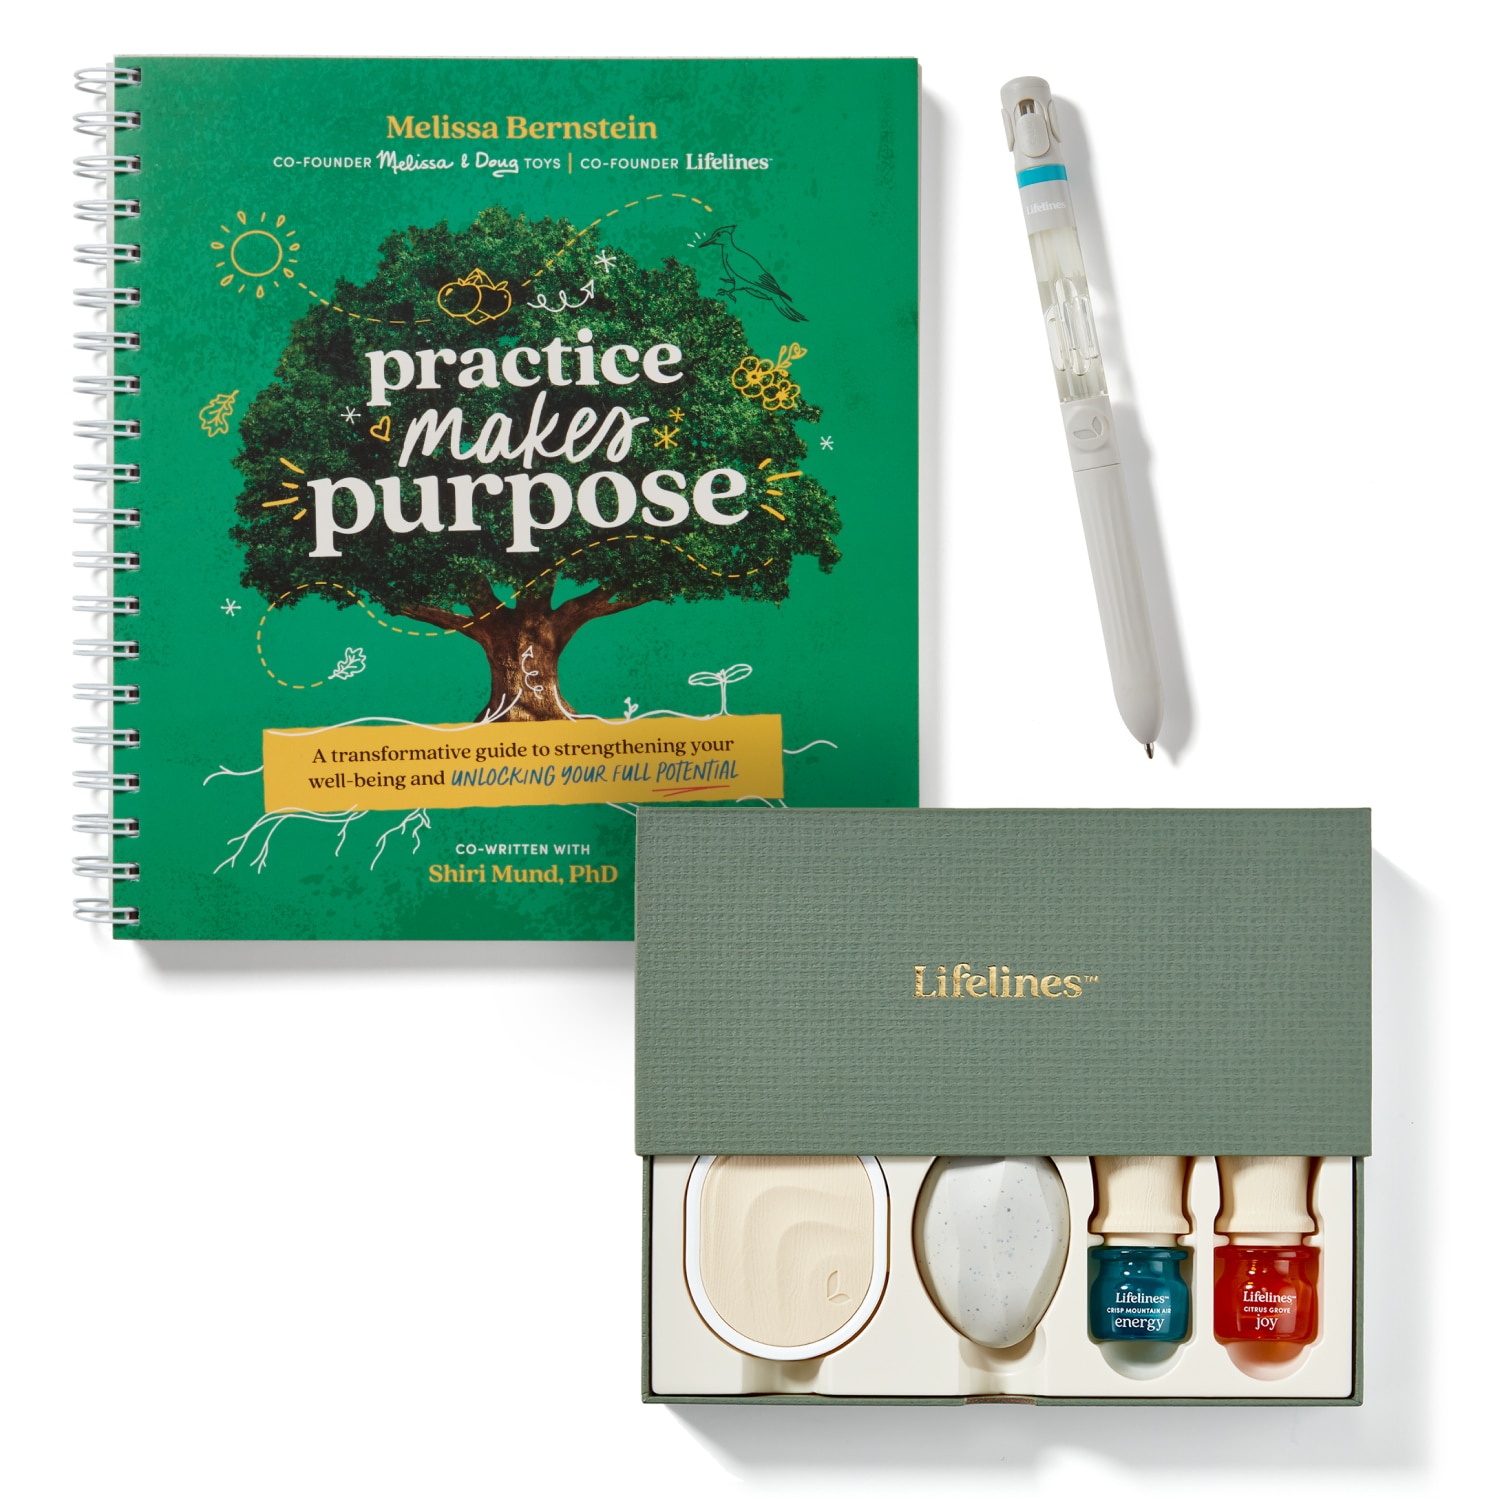 Lifelines "Unleash Your Purpose" Bundle - Gift Set, Pen Diffuser, and Practice Makes Purpose Workbook